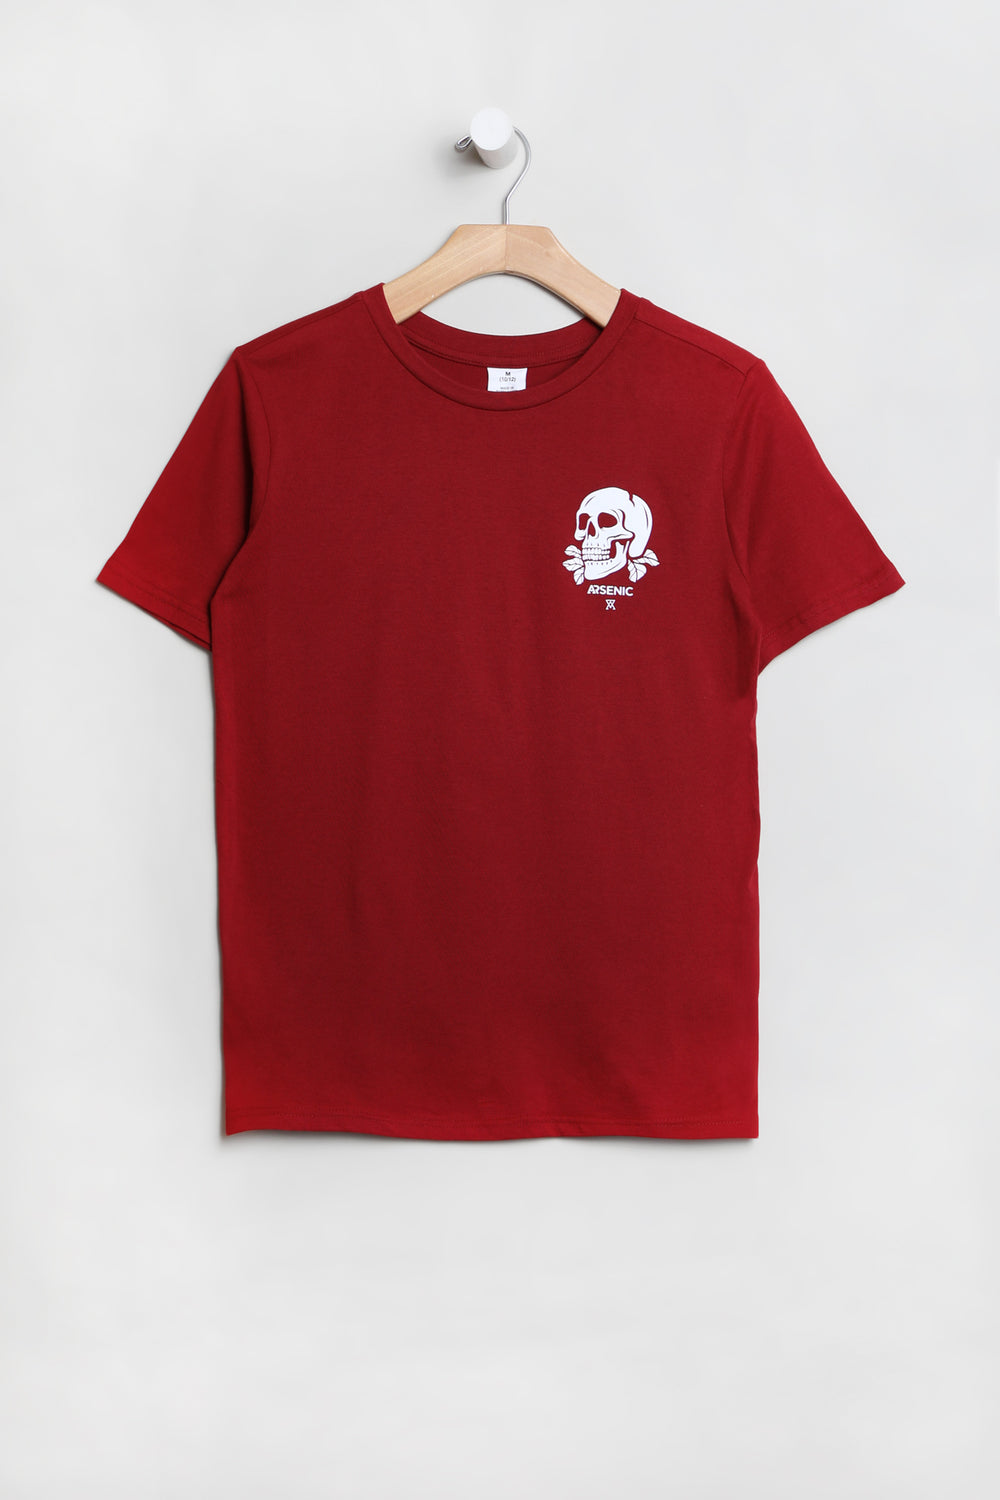 Arsenic Youth Skull Bouquet T-Shirt Arsenic Youth Skull Bouquet T-Shirt